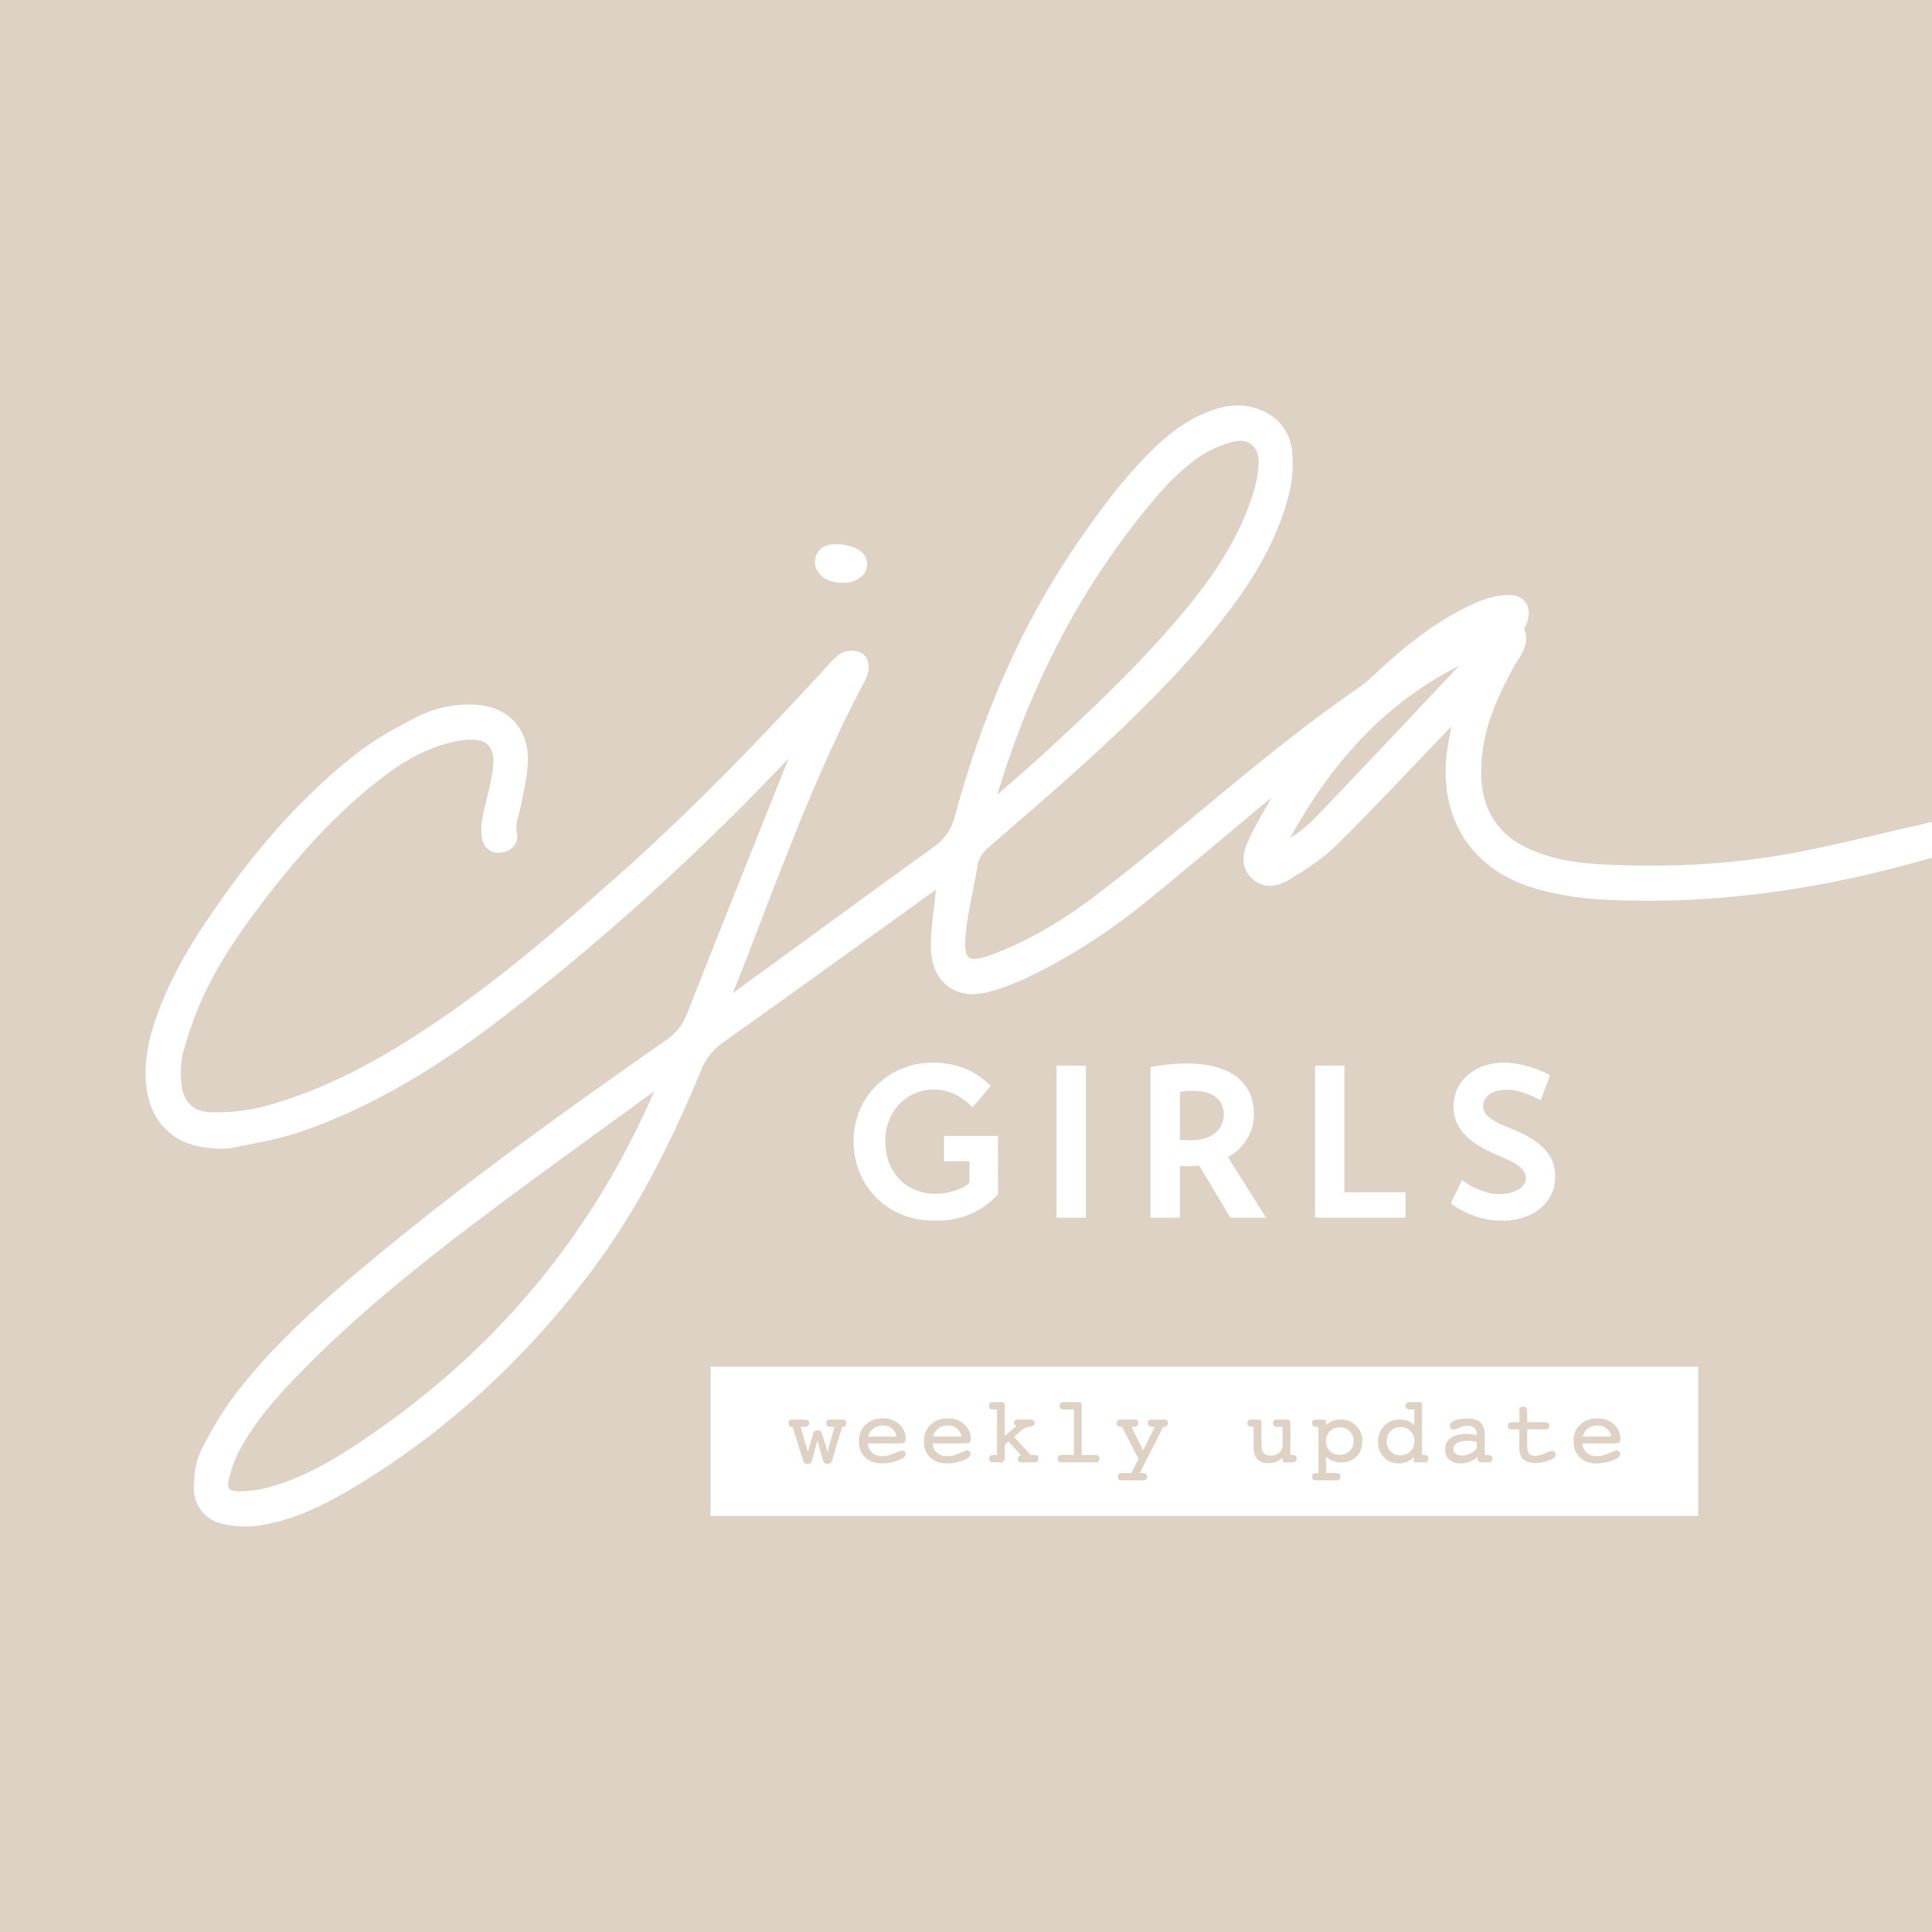 CJLA Girls Weekly Update: April 12-18